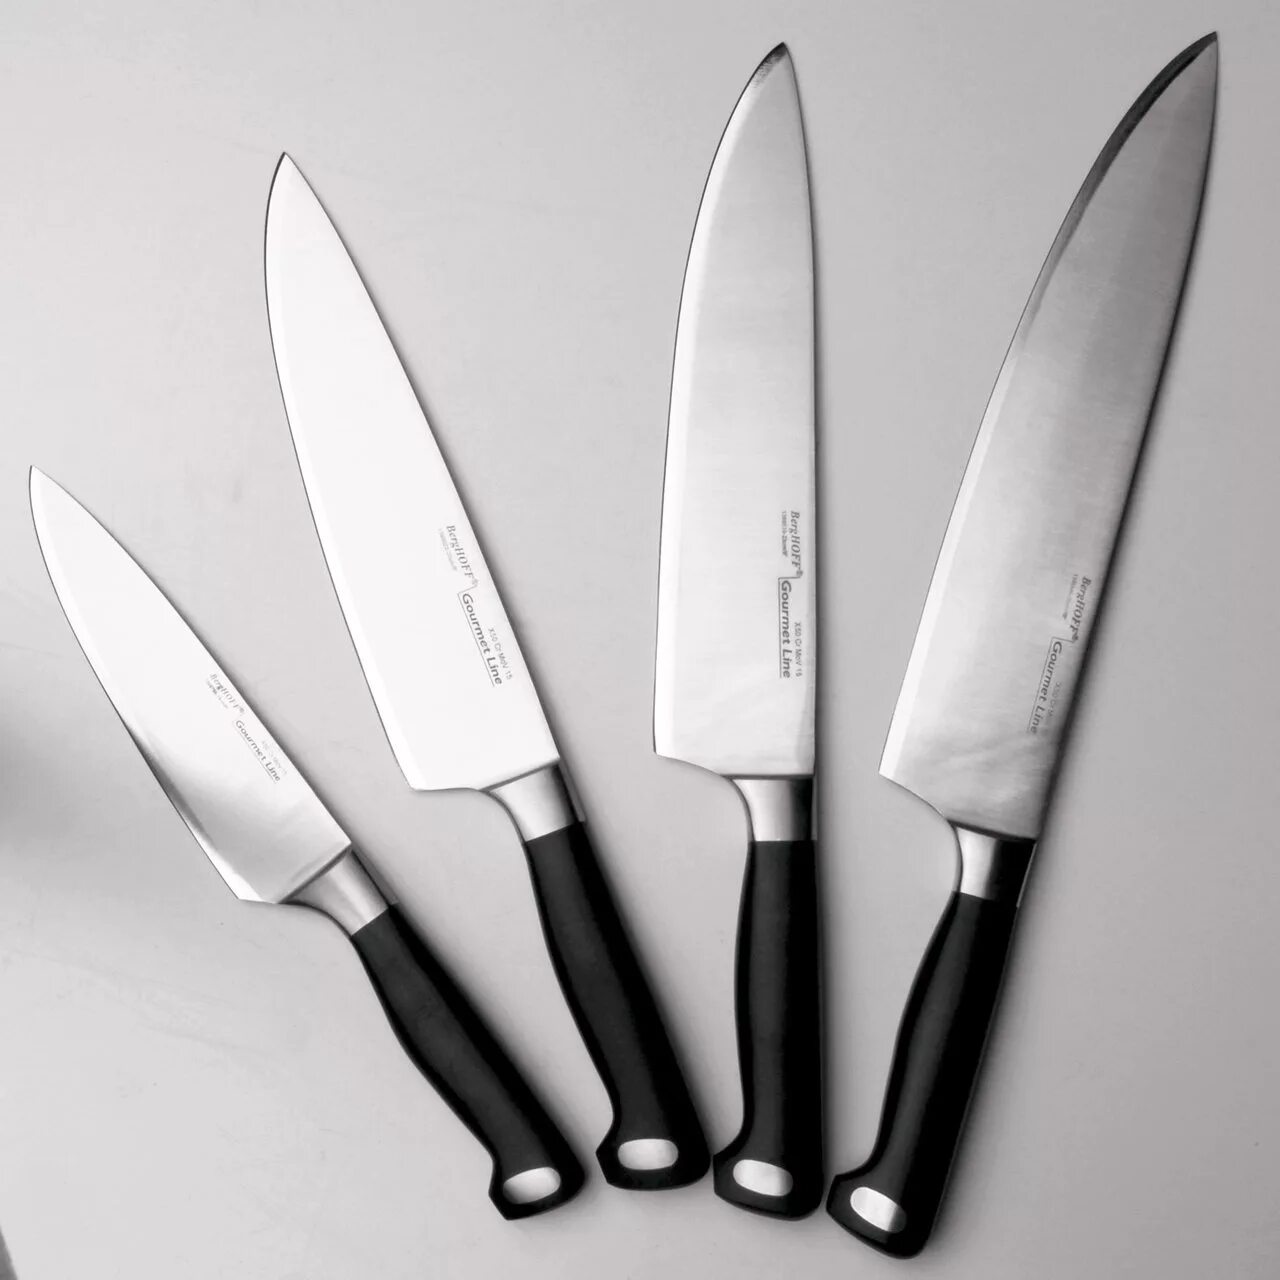 Нож поварской BERGHOFF Gourmet. Tojiro Julia Vysotskaya professional Pro Дамаск. Нож поварской "Gourmet", 20 см. BERGHOFF нож разделочный Gourmet 20 см.